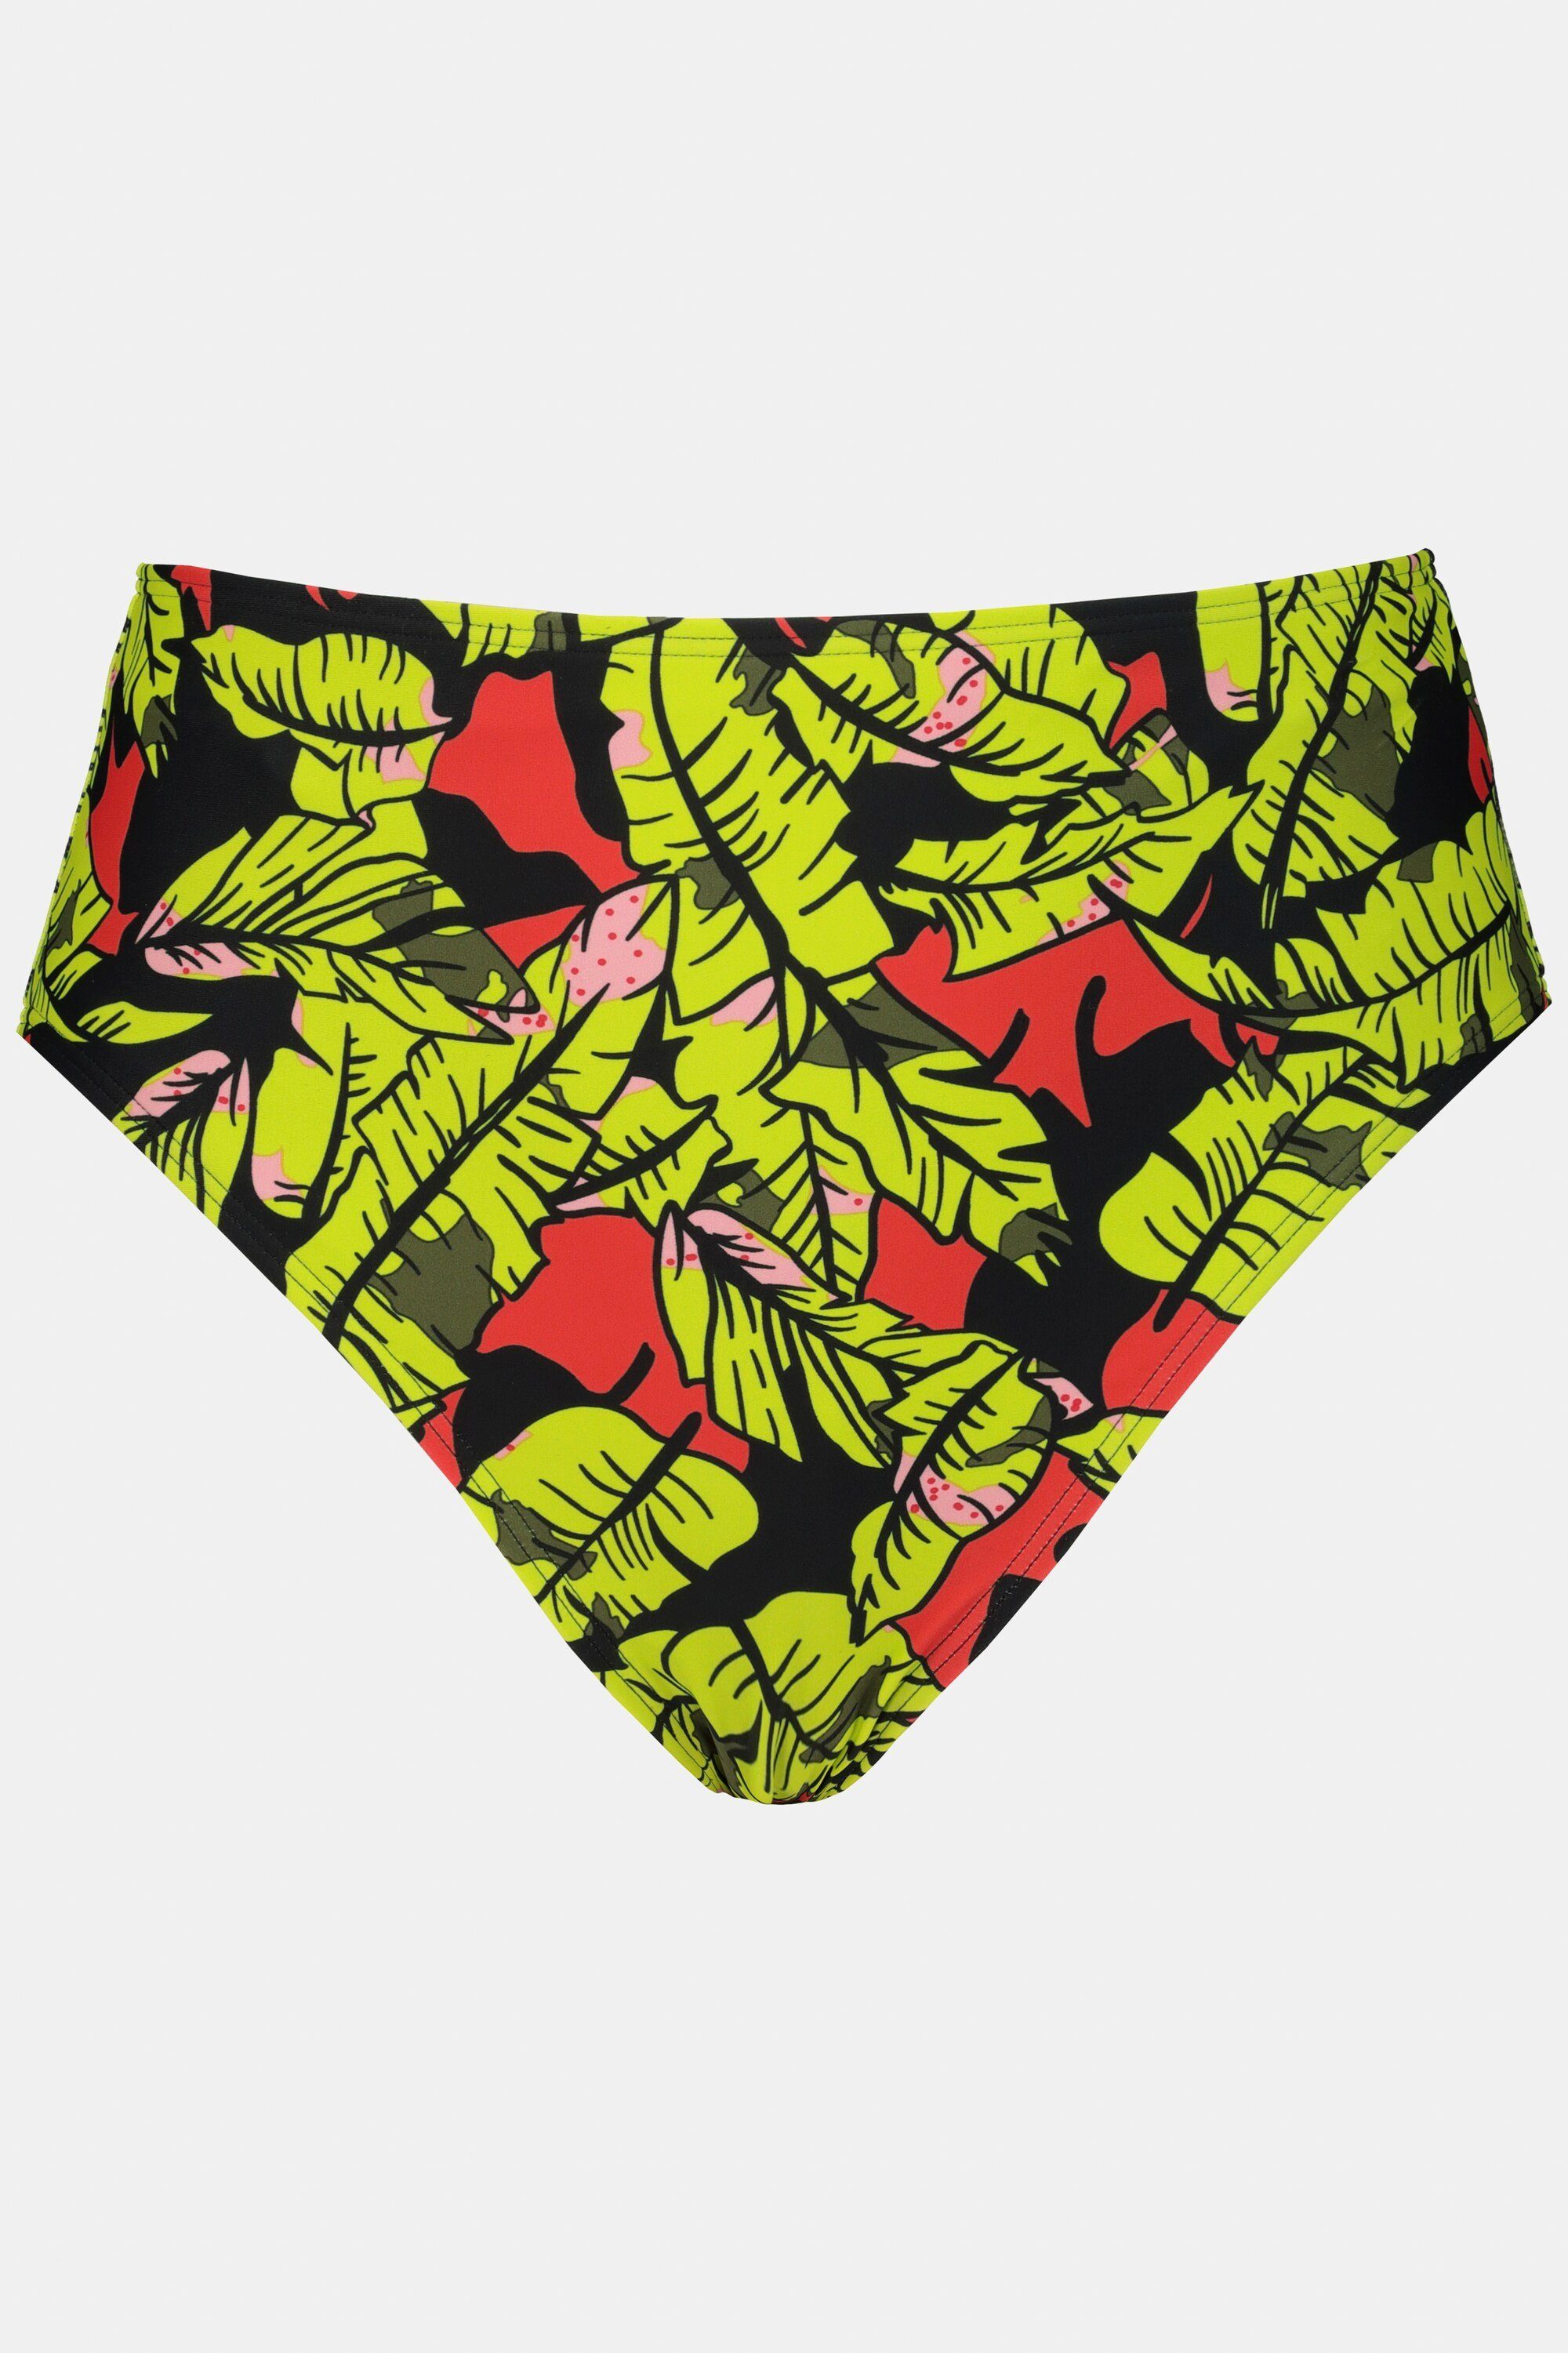 Wäsche/Bademode Unterhosen Studio Untold Slip Bikini Slip Jungle Print High Waist